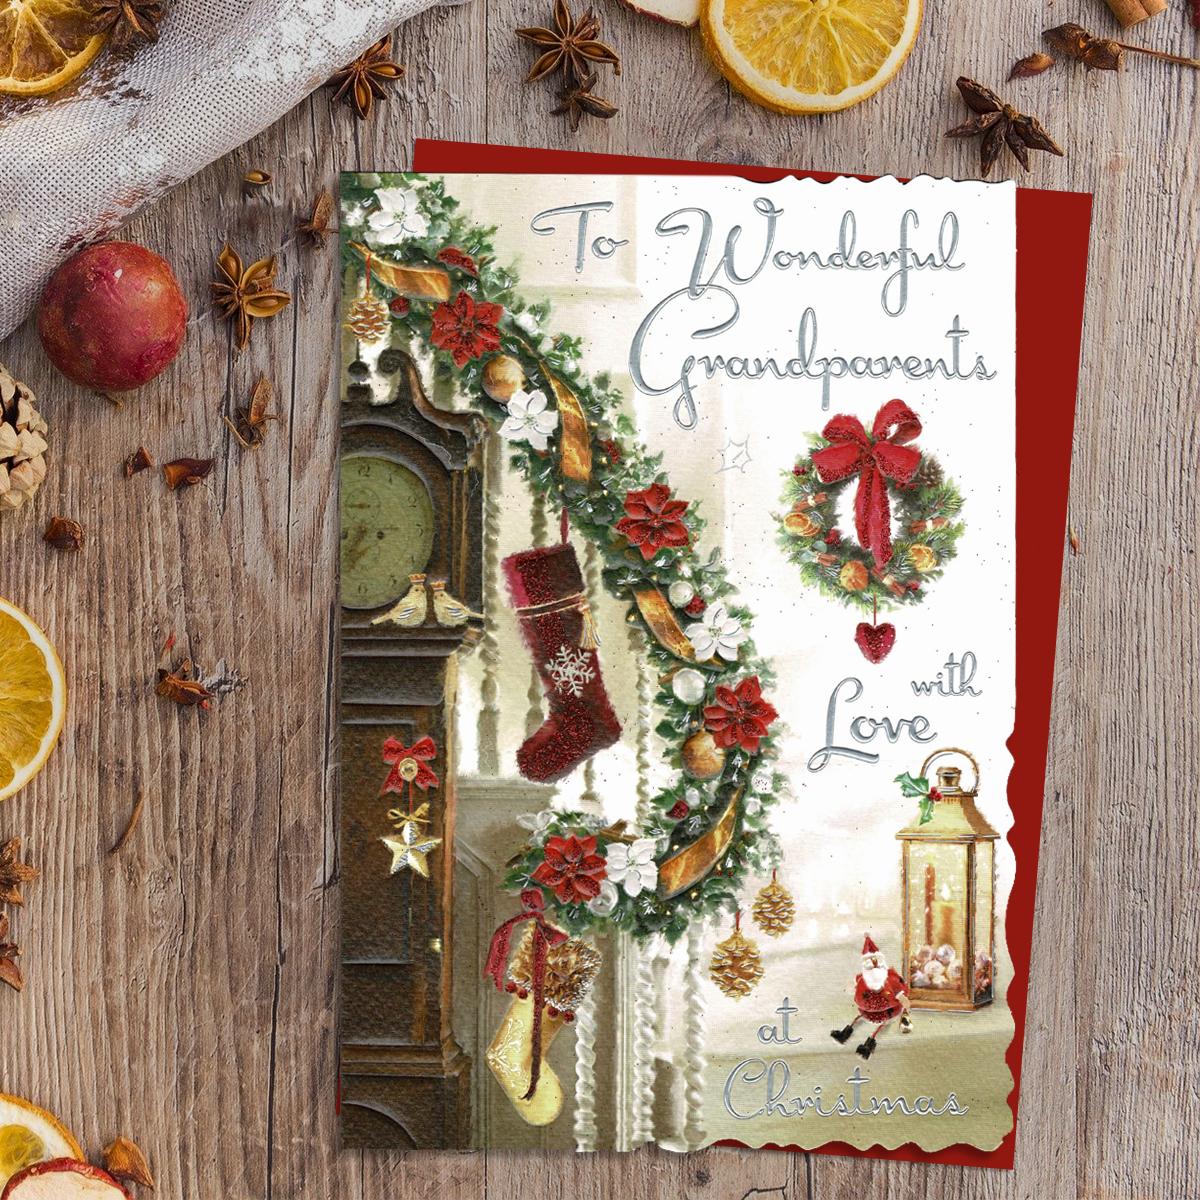 Grandparents Christmas Card Alongside Its Red Envelope